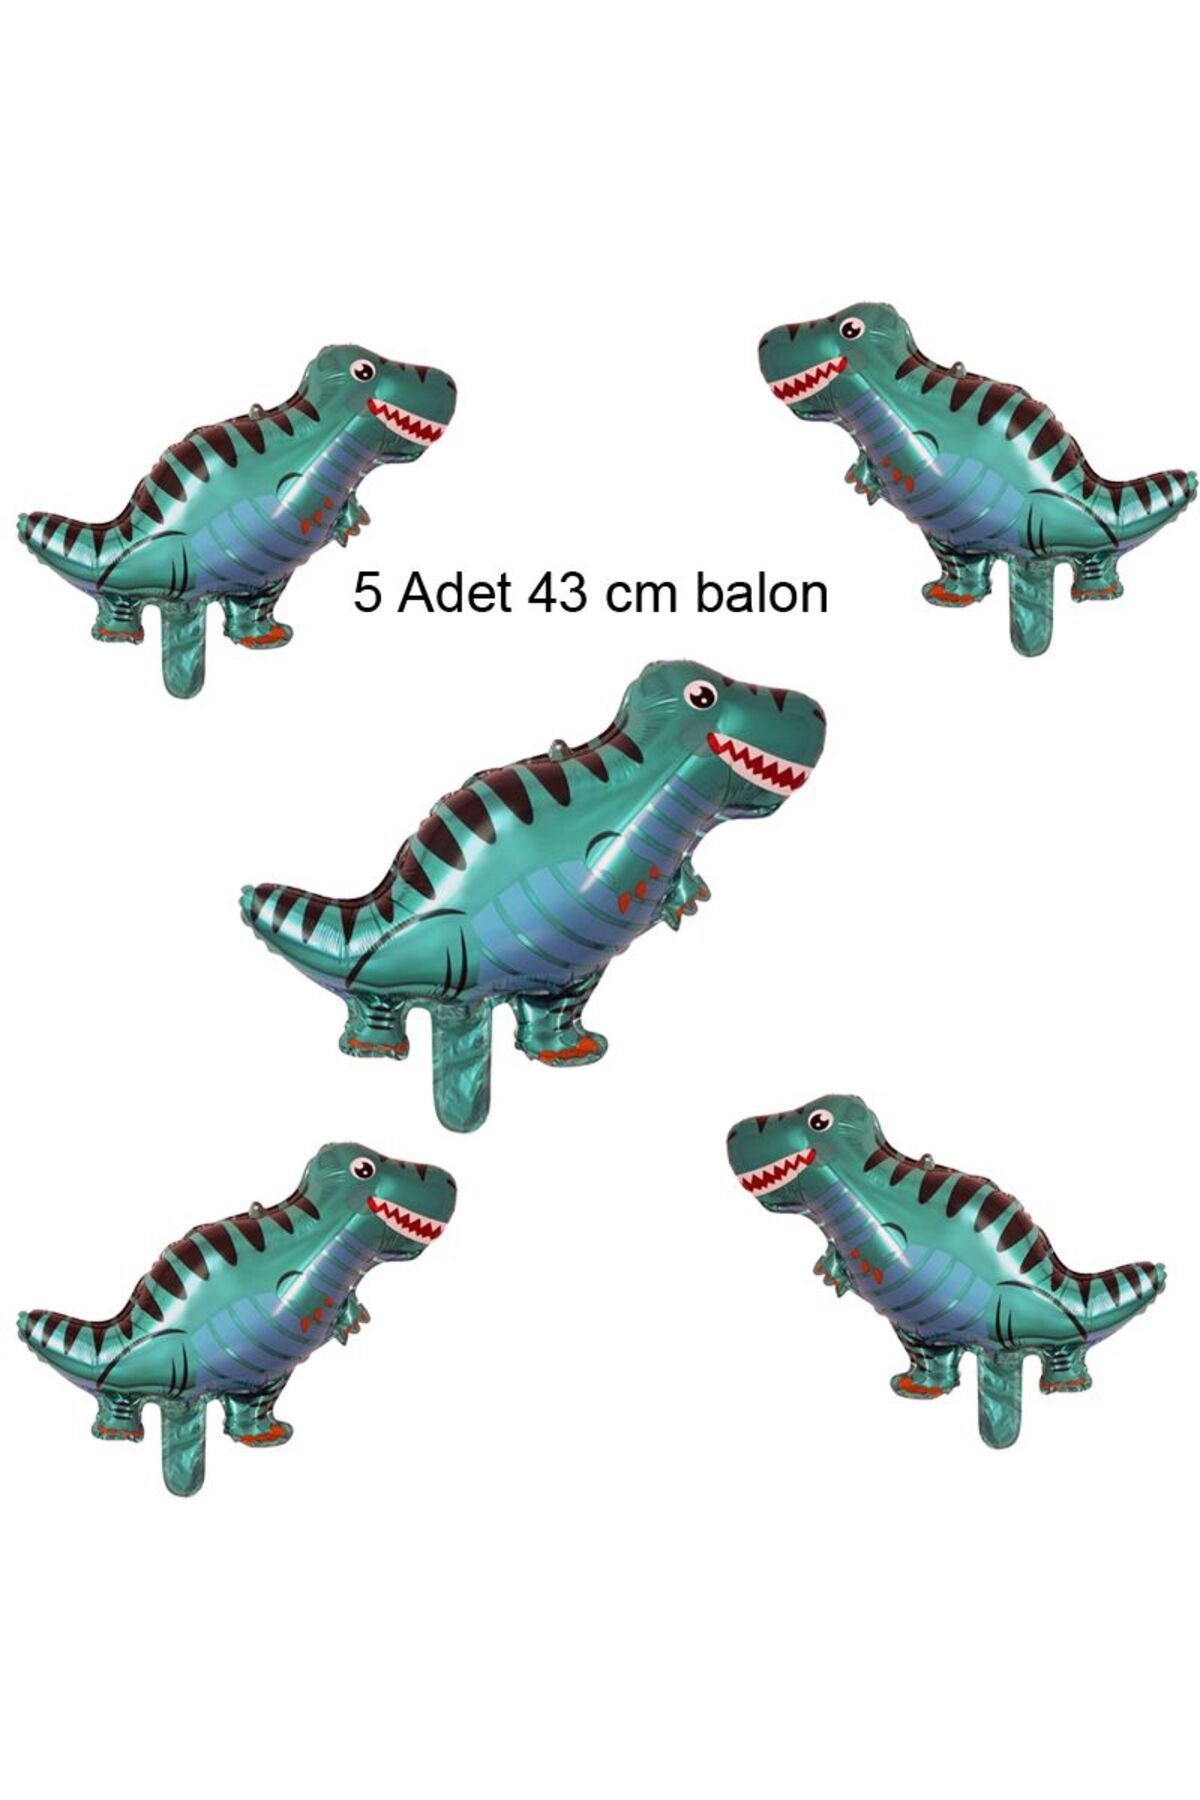 partidolu Tyrannosaurus Shape Şekilli Yeşil Renk Dinozor Folyo Balon 43 Cm 5 Adet